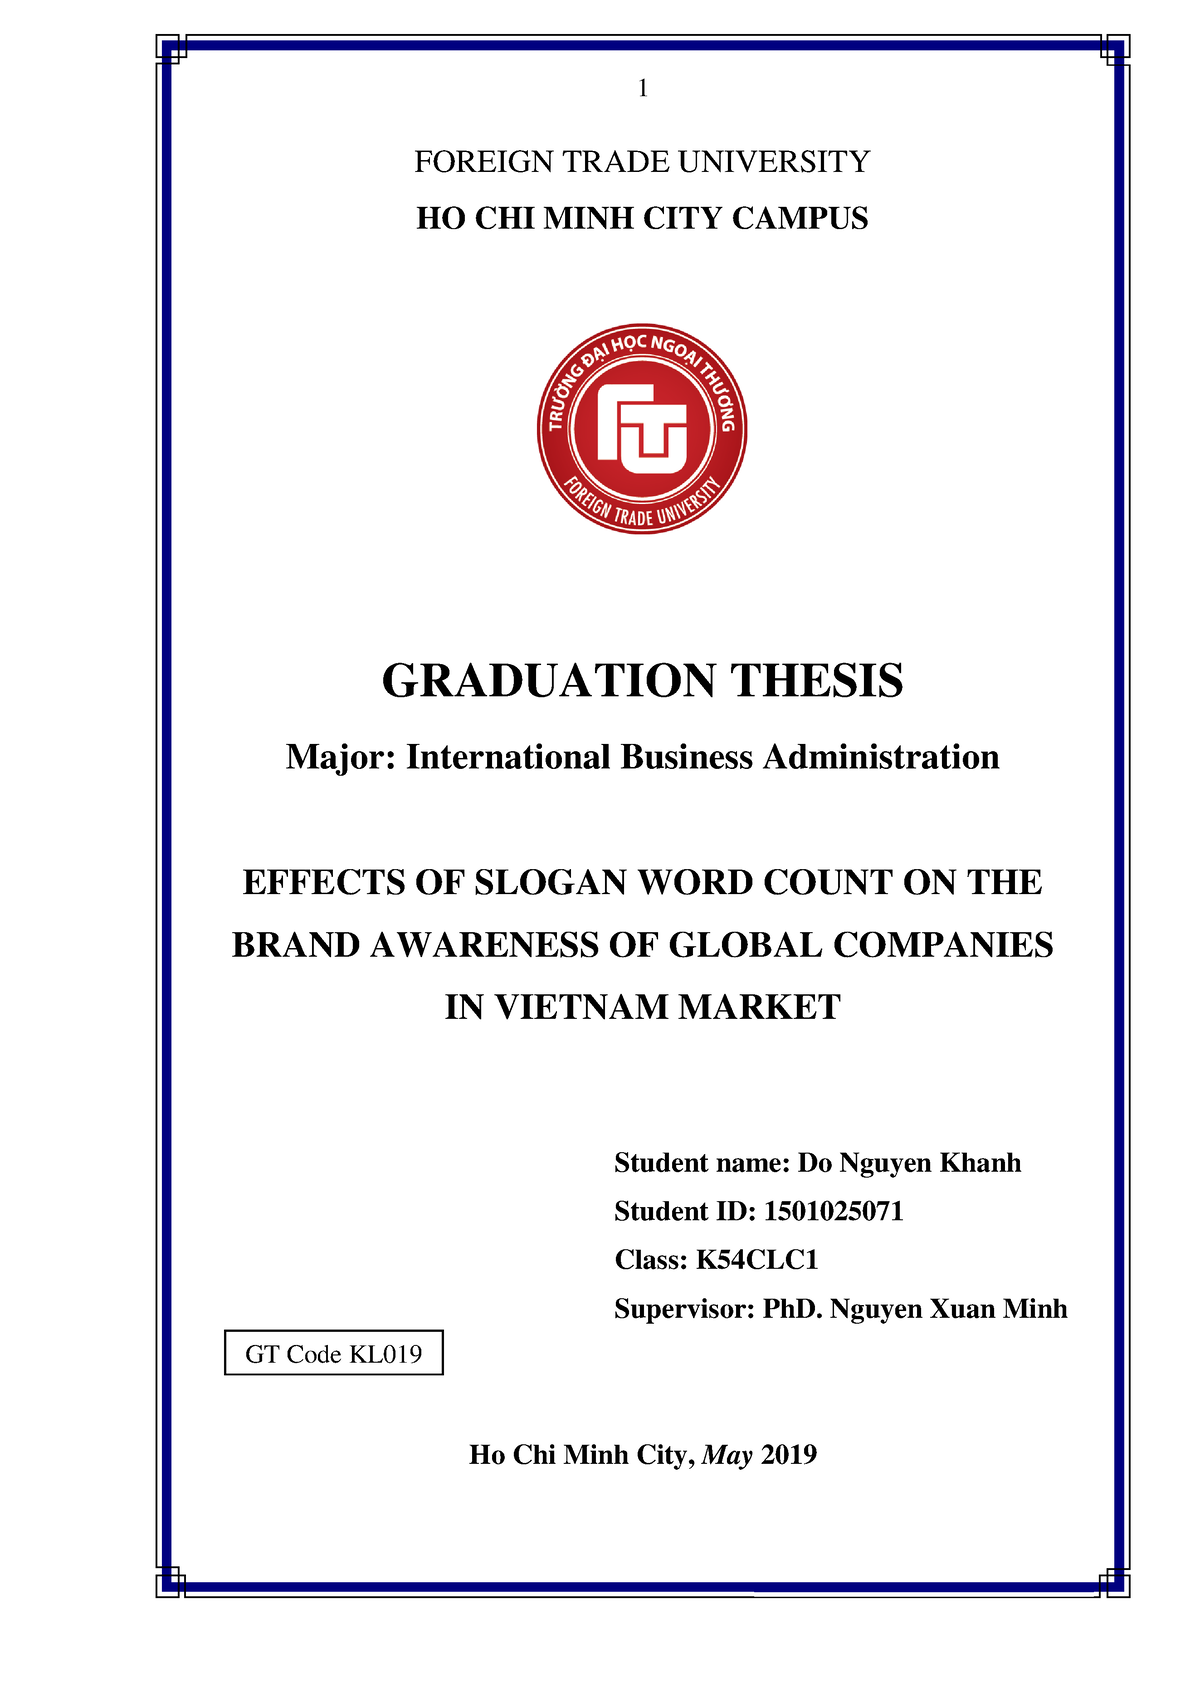 graduation thesis translate